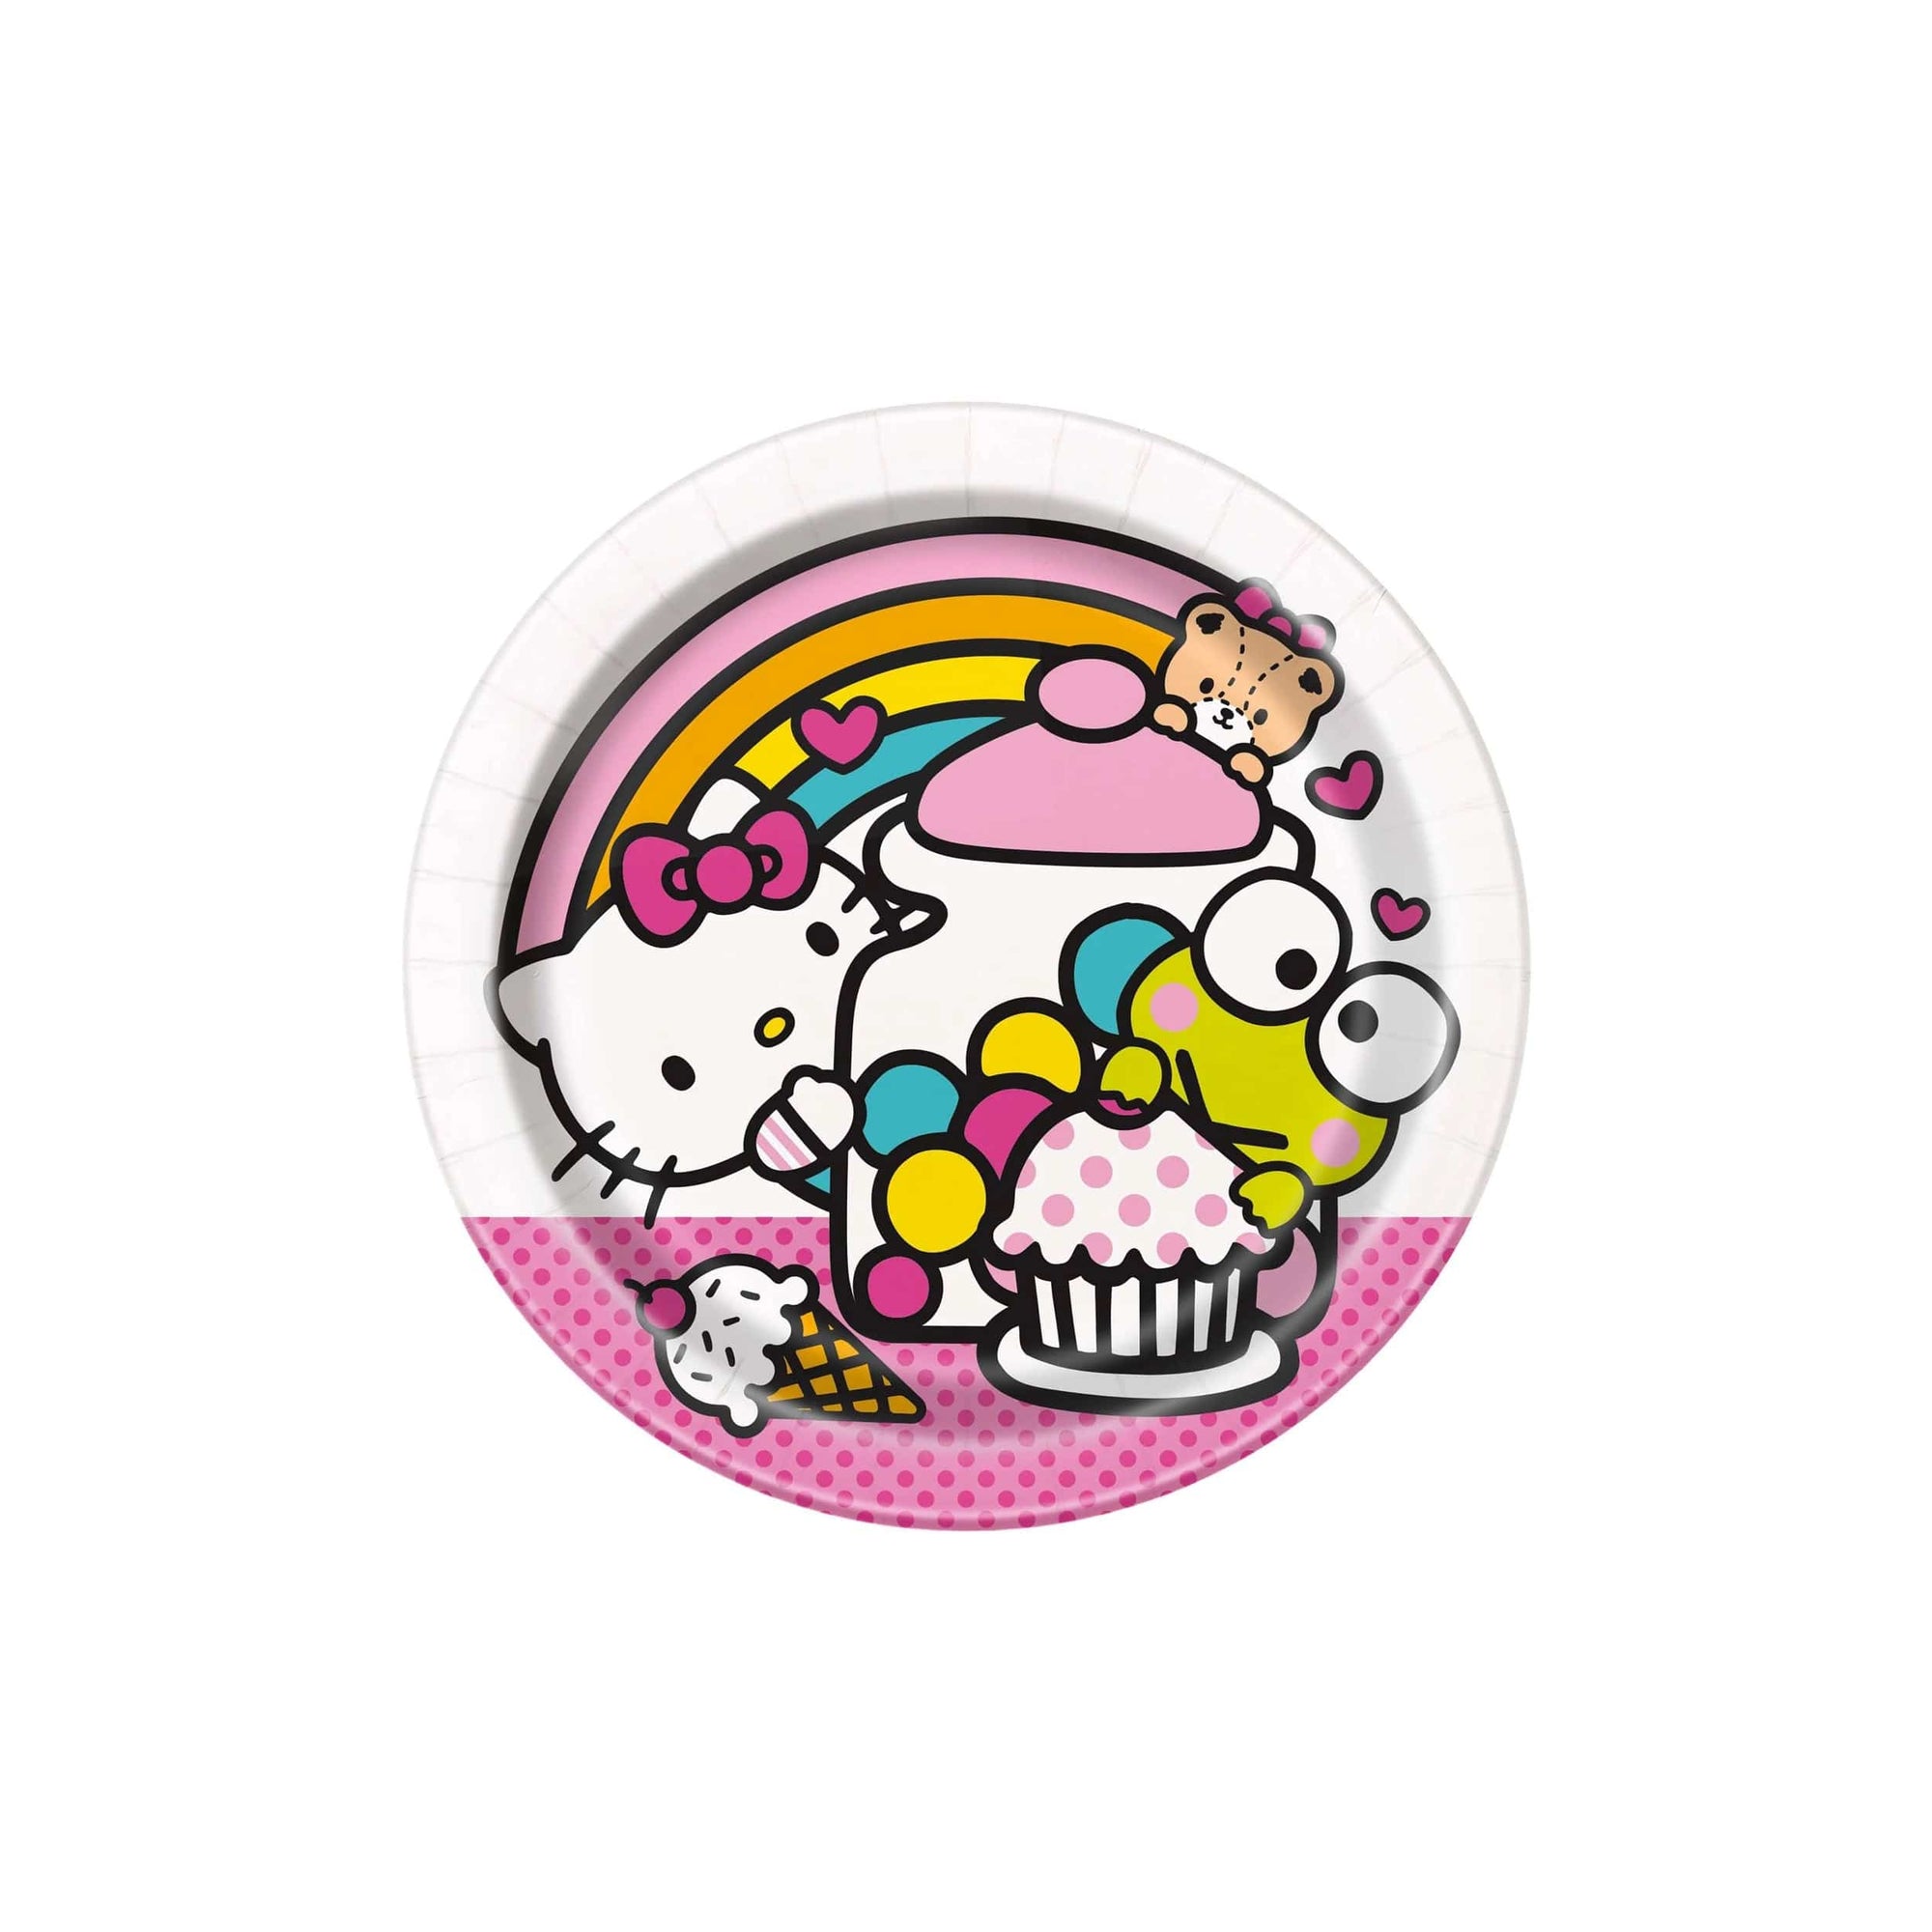 Sanrio Hello Kitty and Kerropi Party Plates